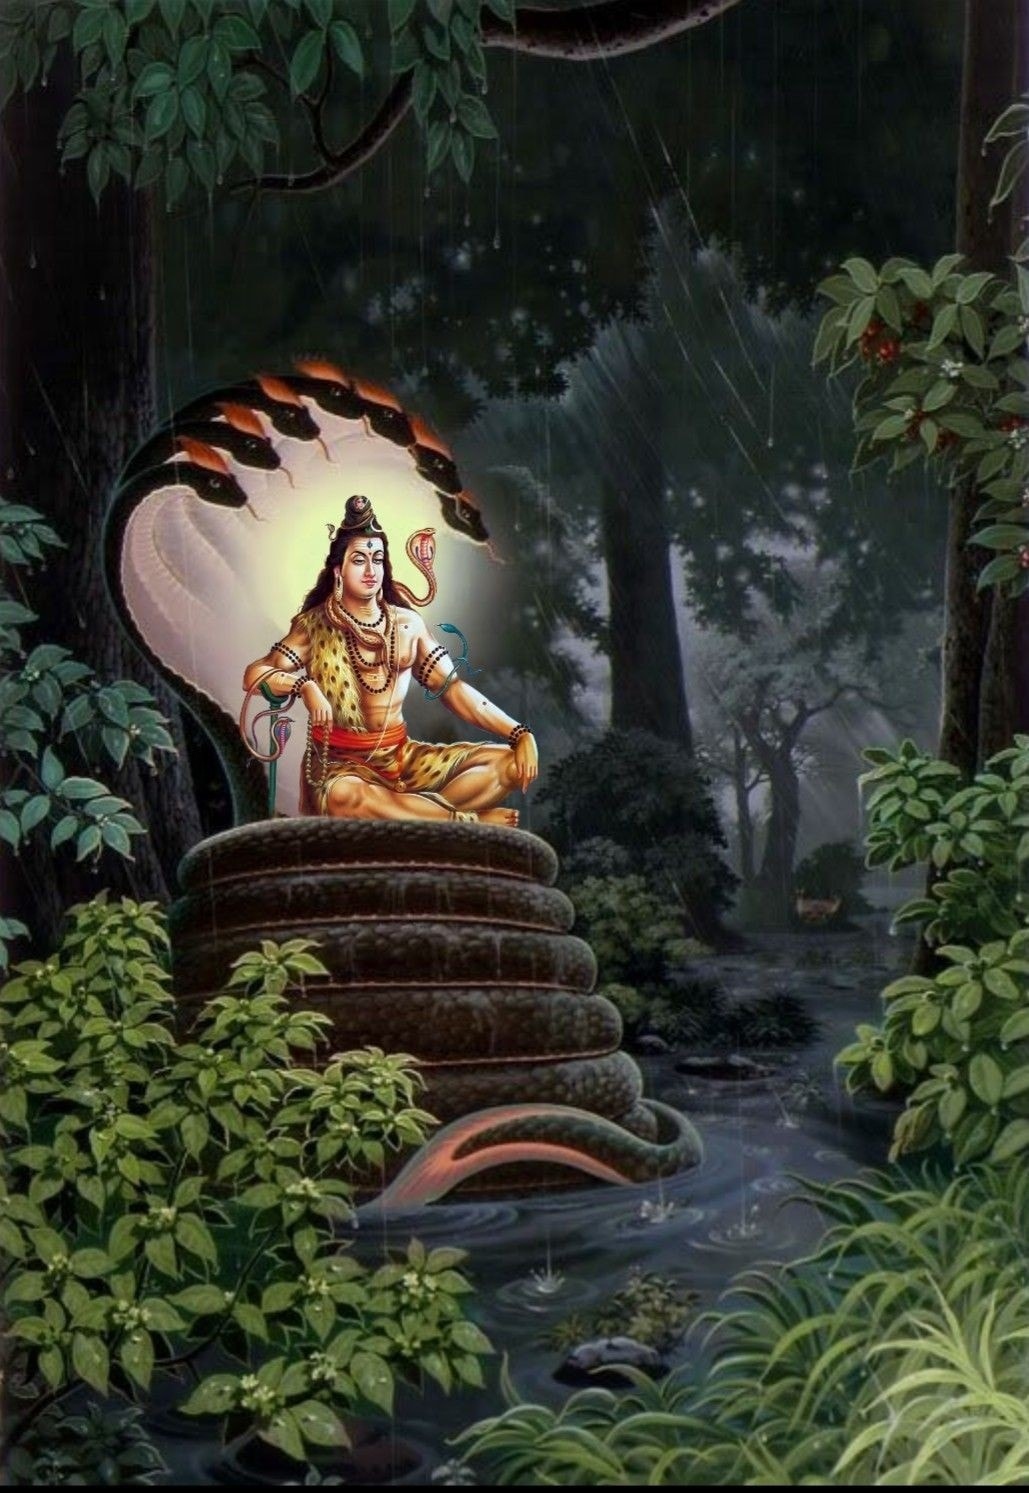 Sivan Mass - Sitting On Sheshnag - Rainy Background